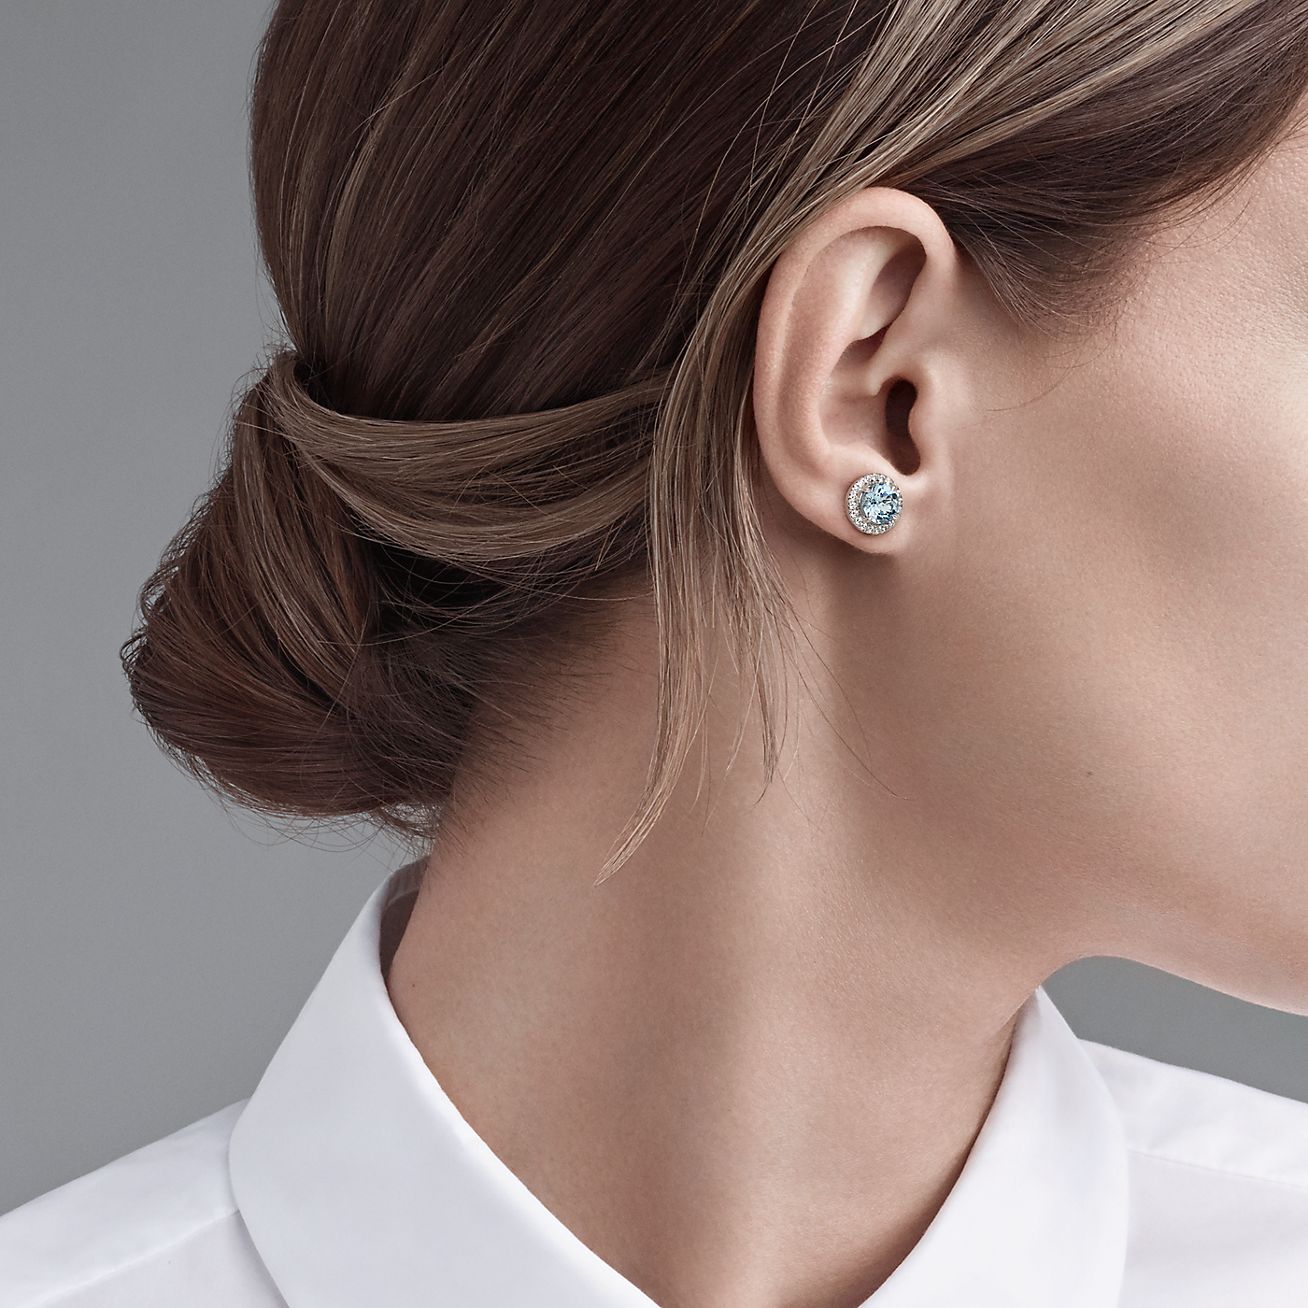 Tiffany Soleste® earrings in platinum 